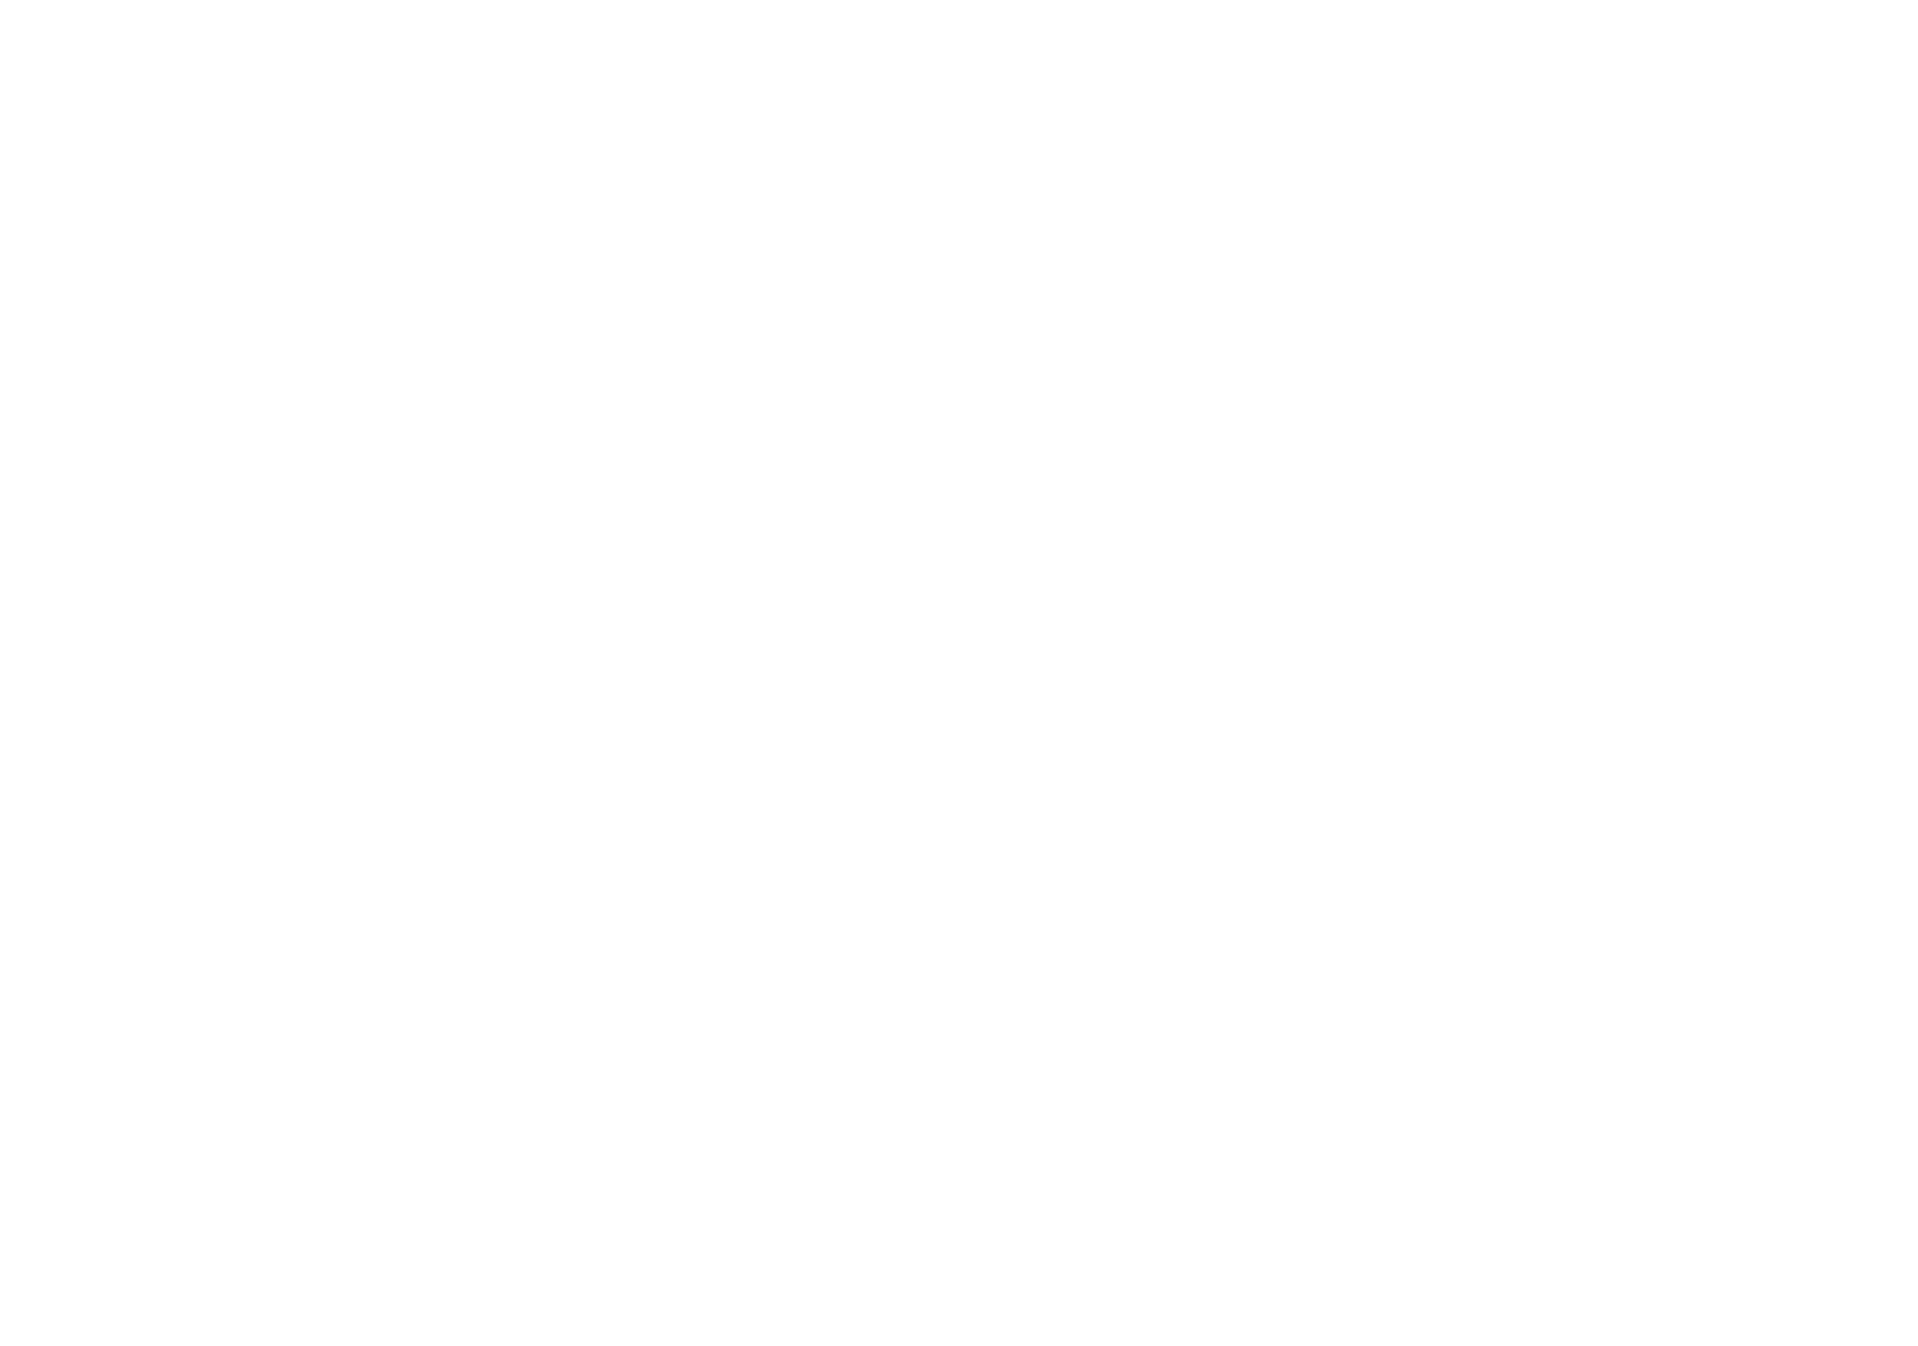 Key grips | Atlas For Media Services